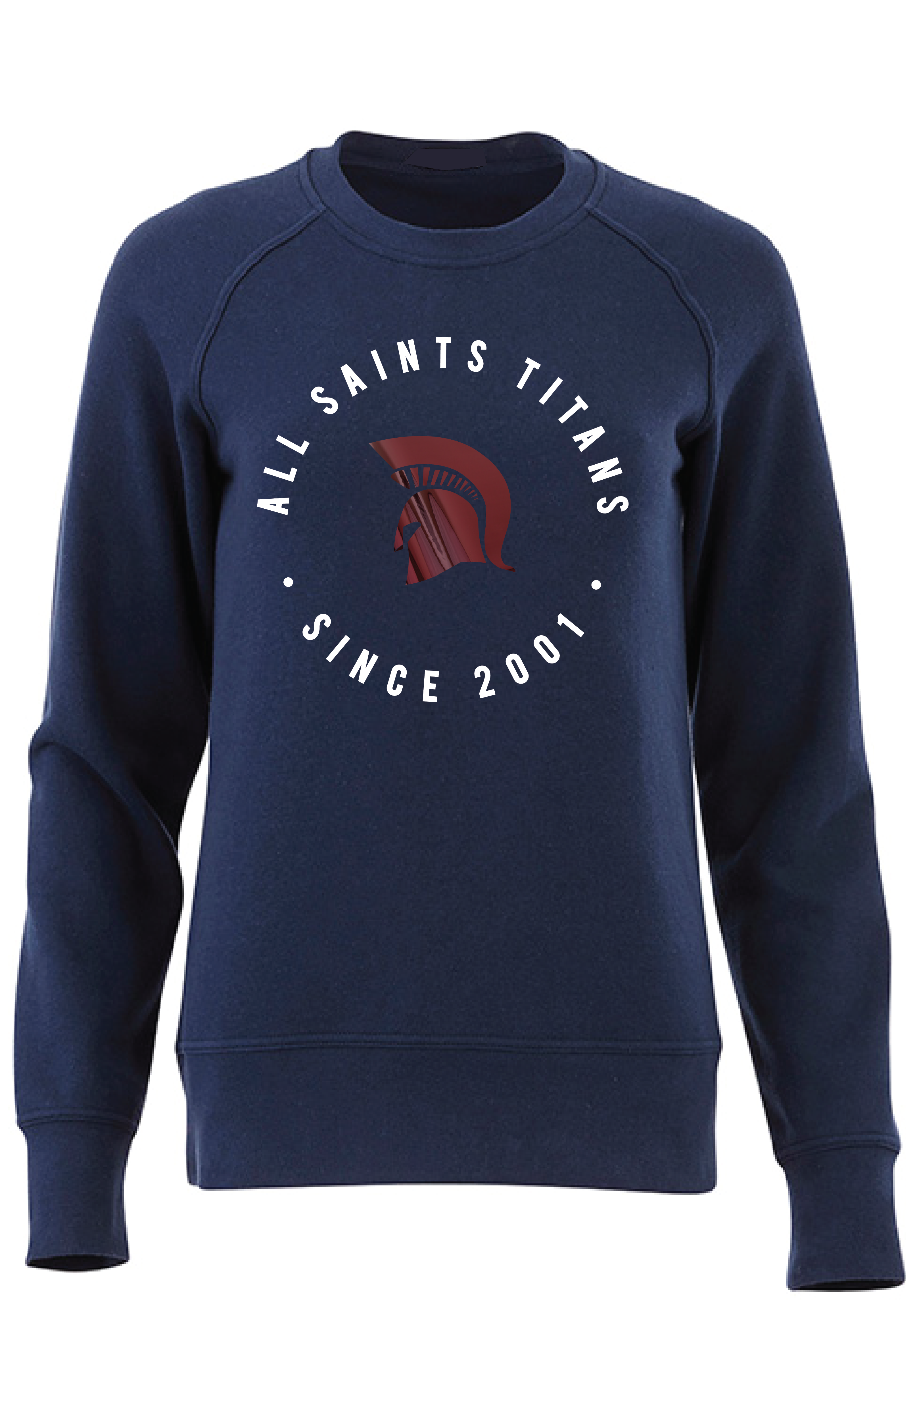 All Saints Raglan Navy Crewneck sweatshirt-Ladies